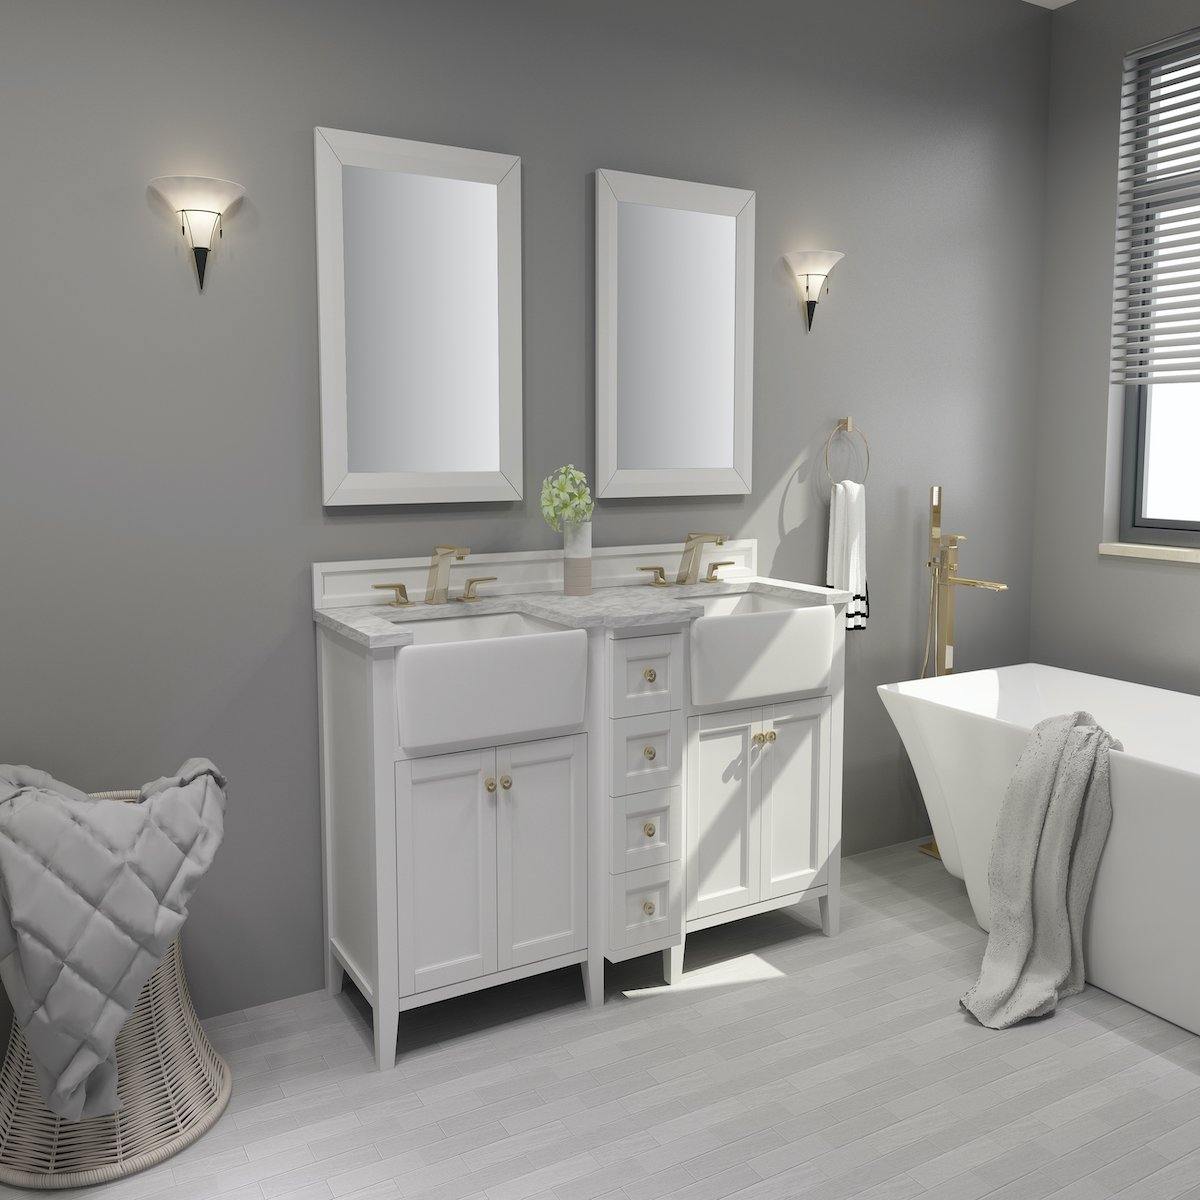 Ancerre Designs 60 Inch White Double Vanity in Bathroom #finish_white